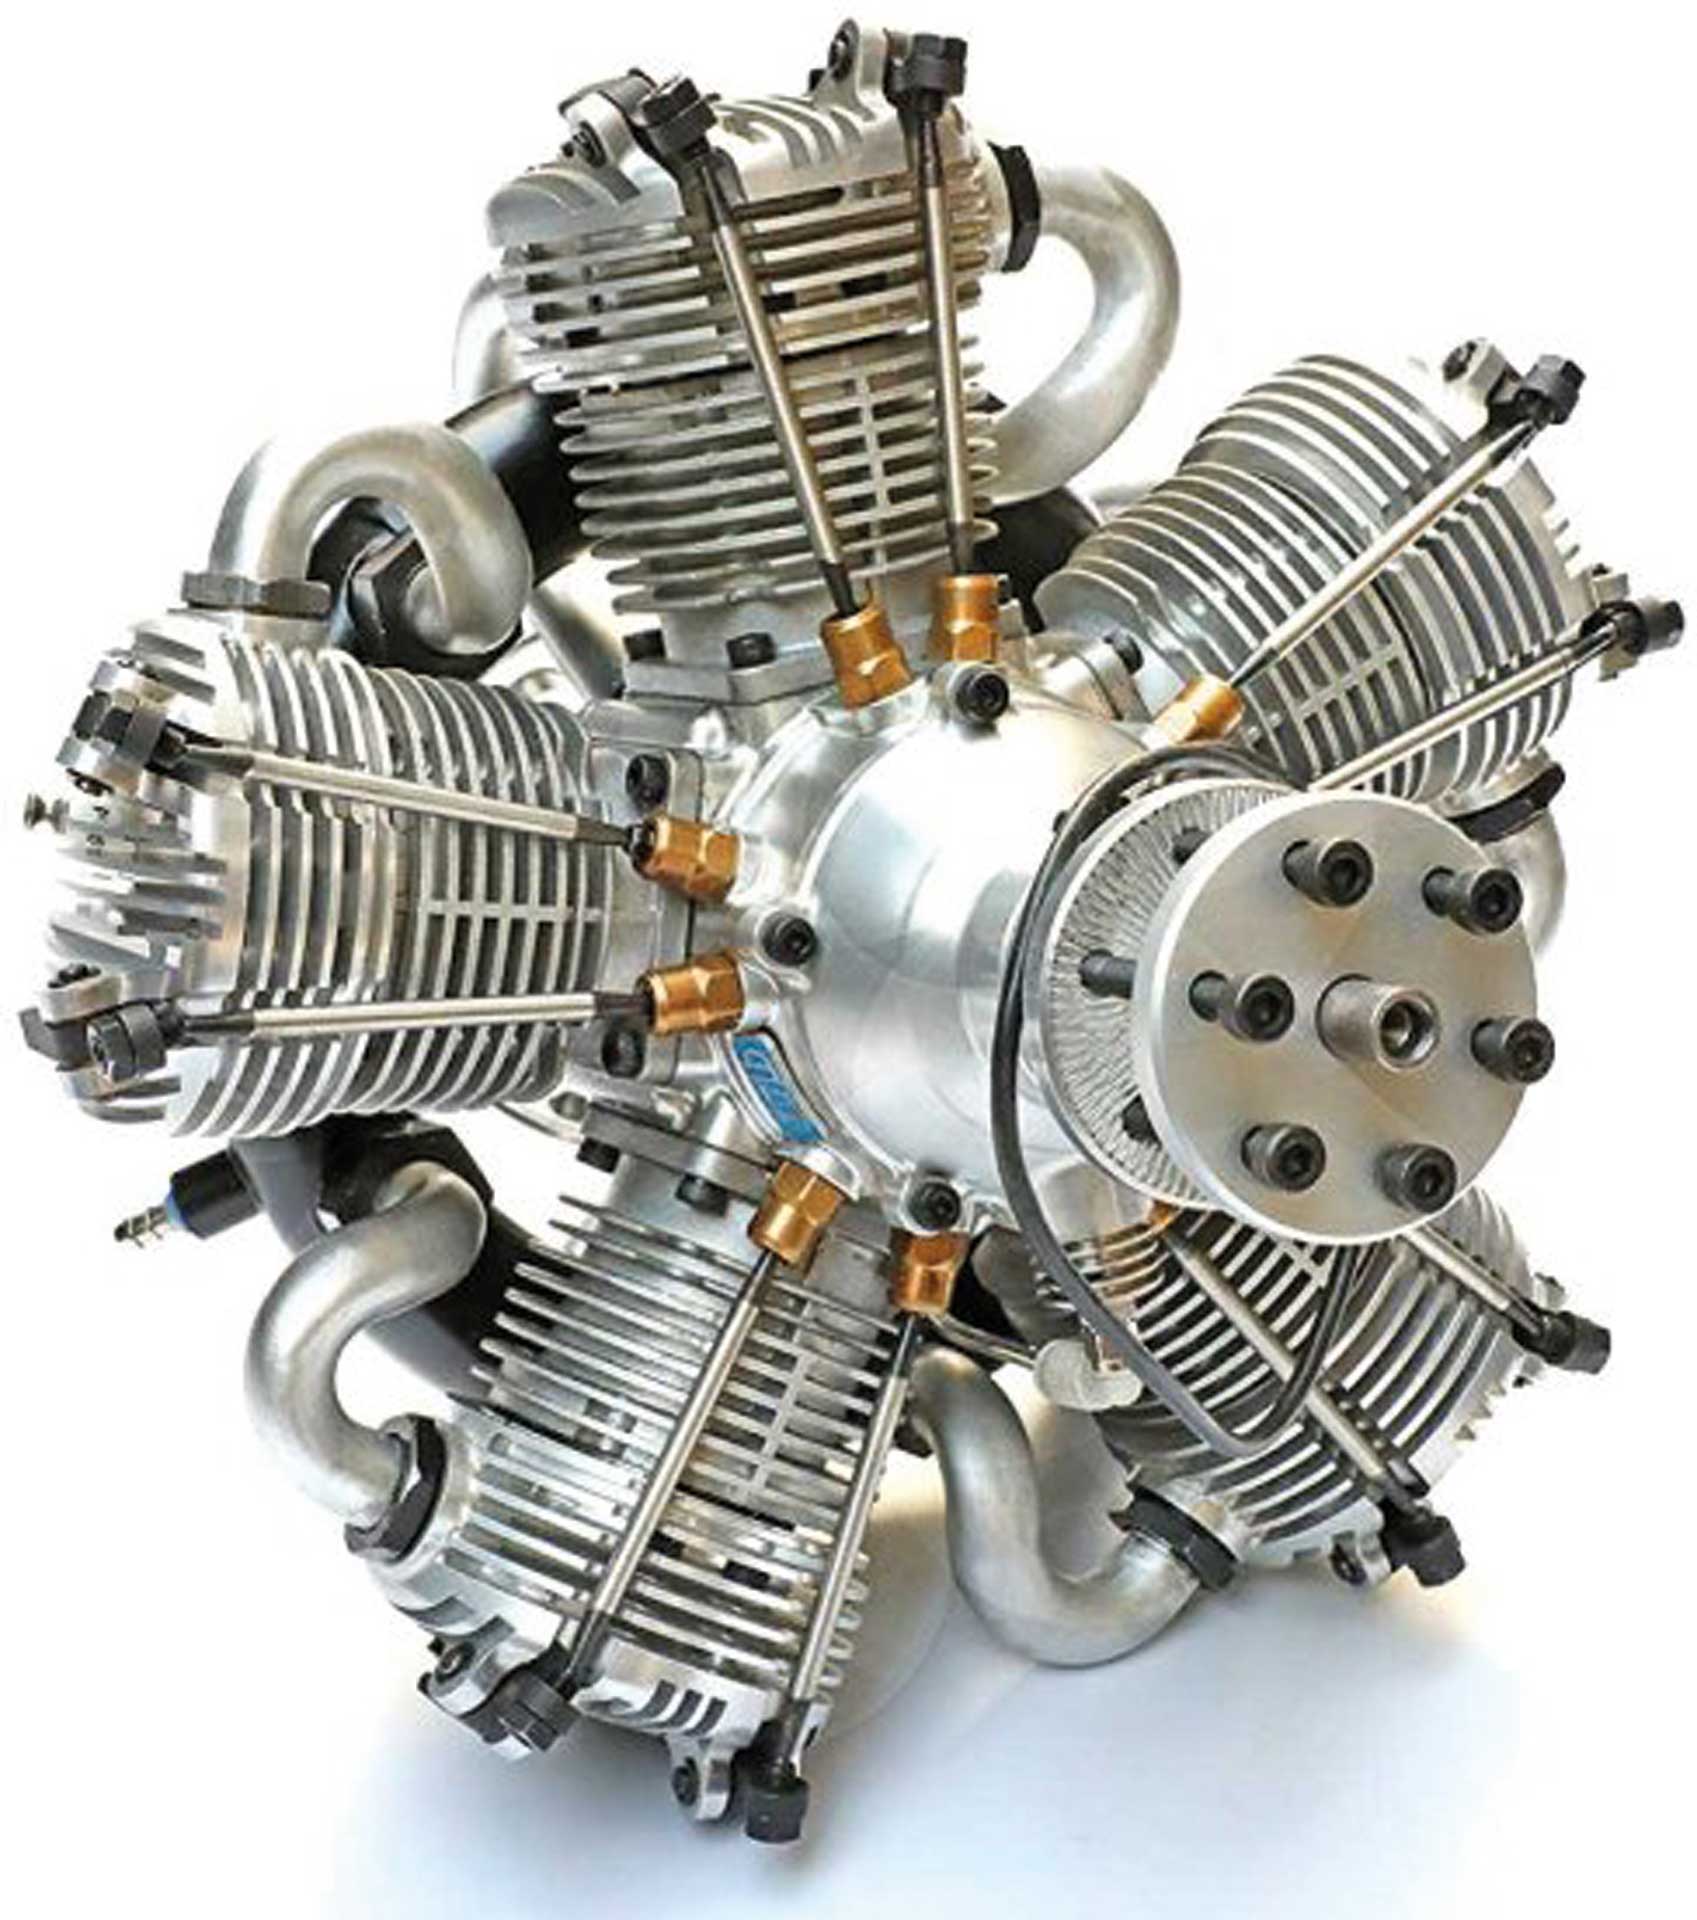 NGH GF 150 R5 gasoline radial engine